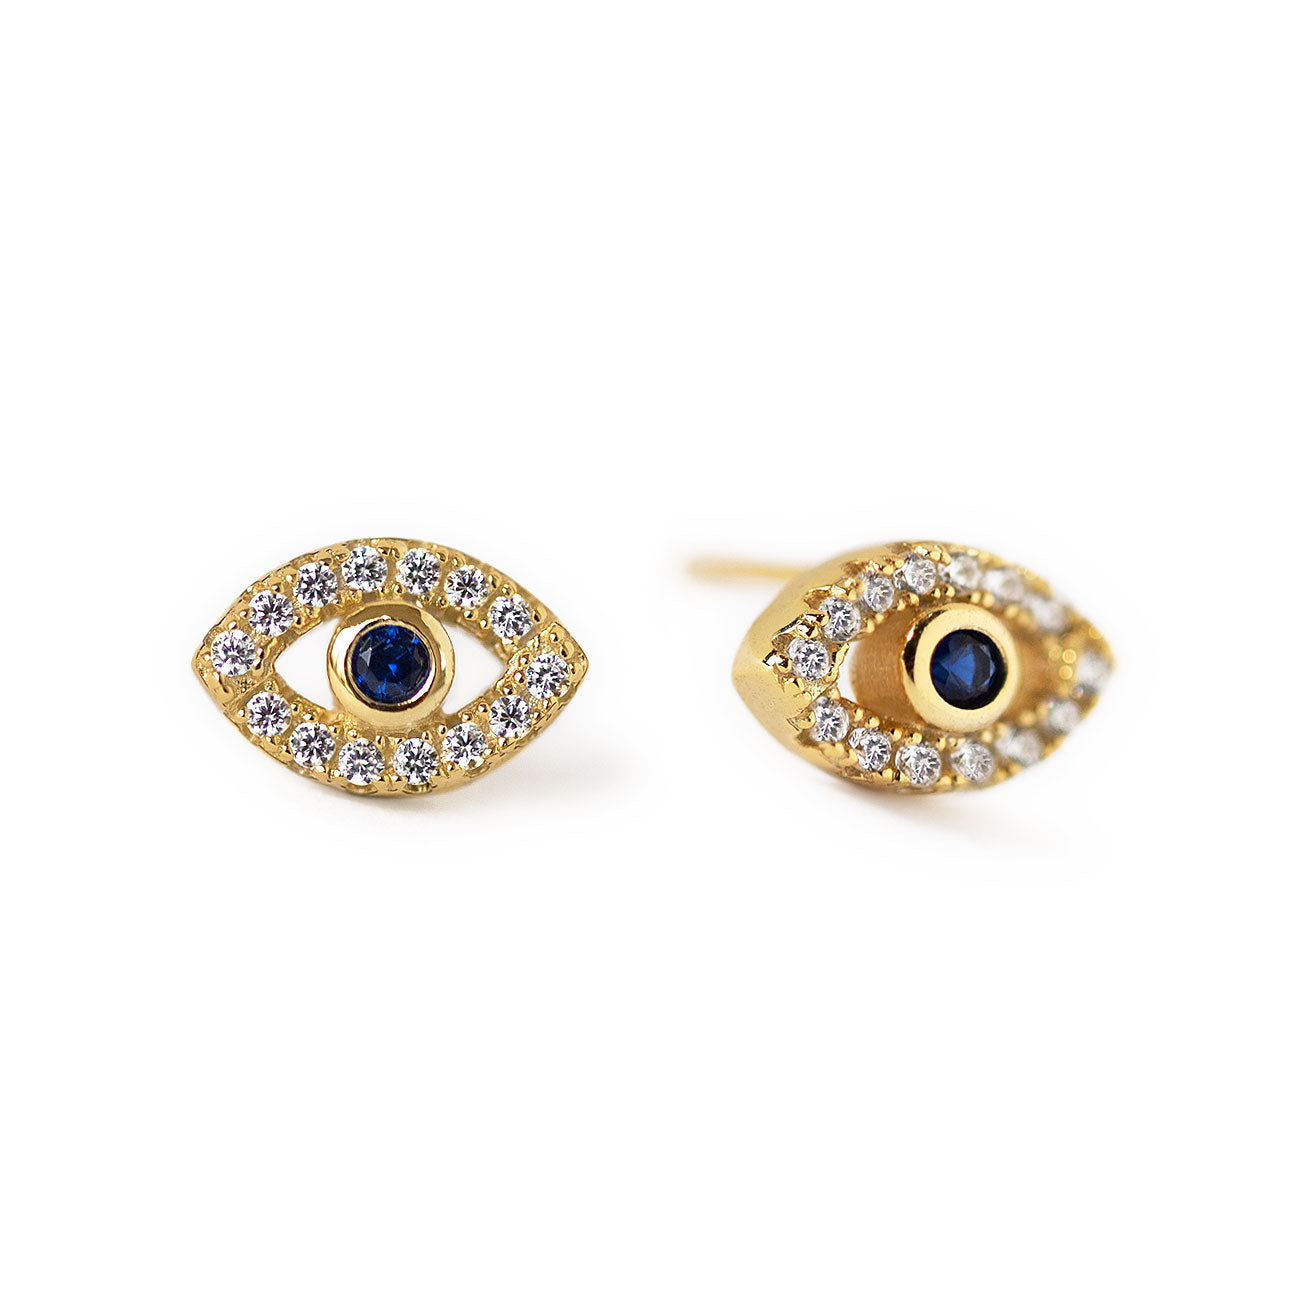 Swarovski Symbolic hoop earrings, Evil eye, Blue, Rose gold-tone plated